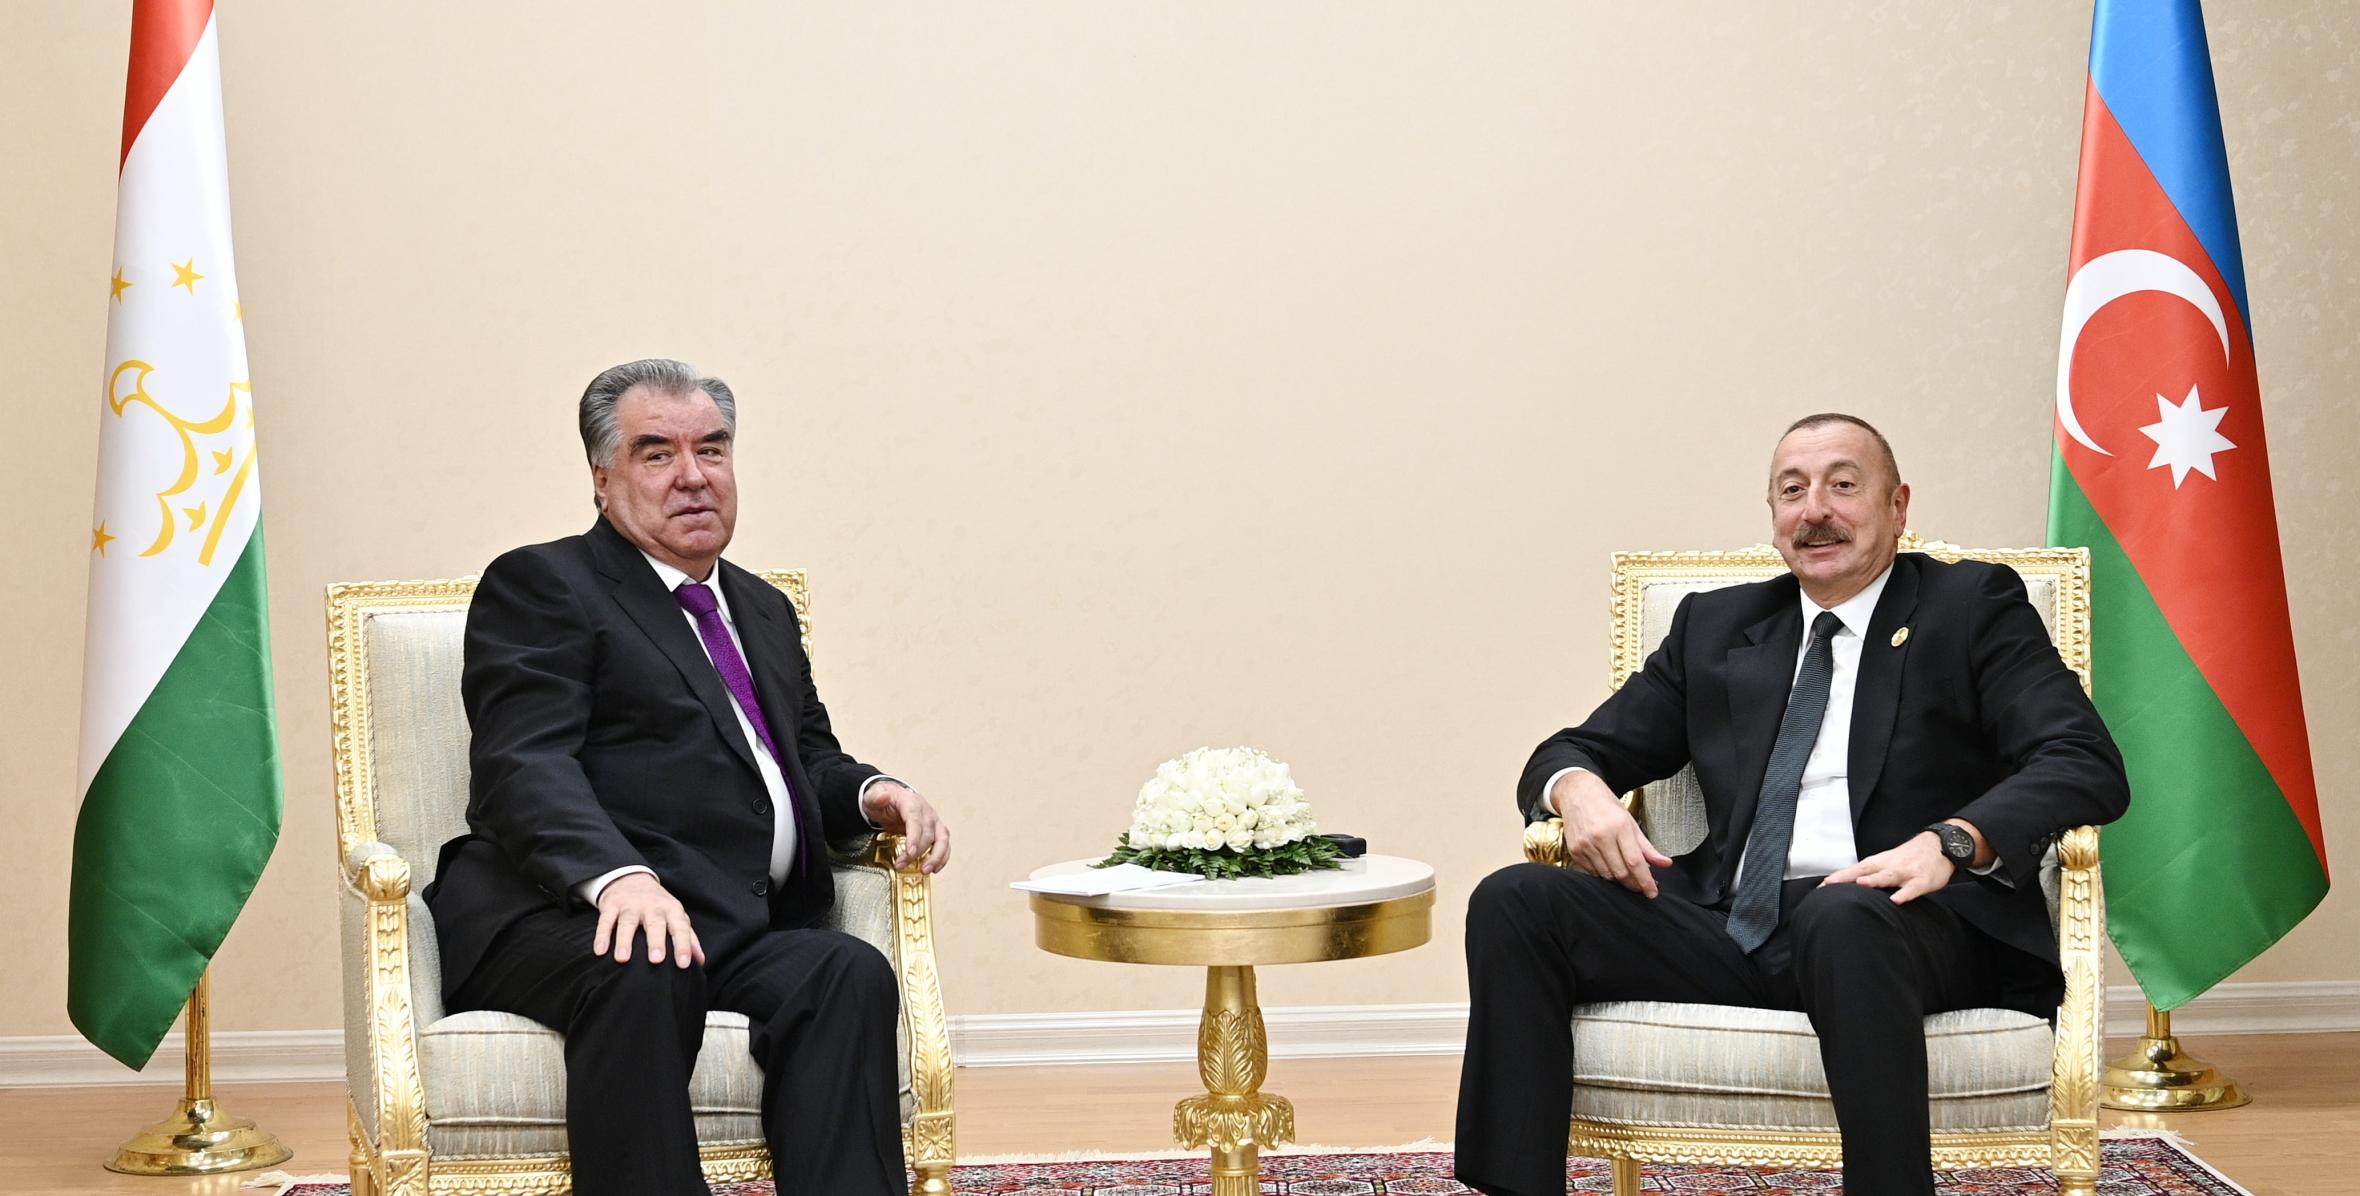 Ilham Aliyev met with Tajikistan's President Emomali Rahmon